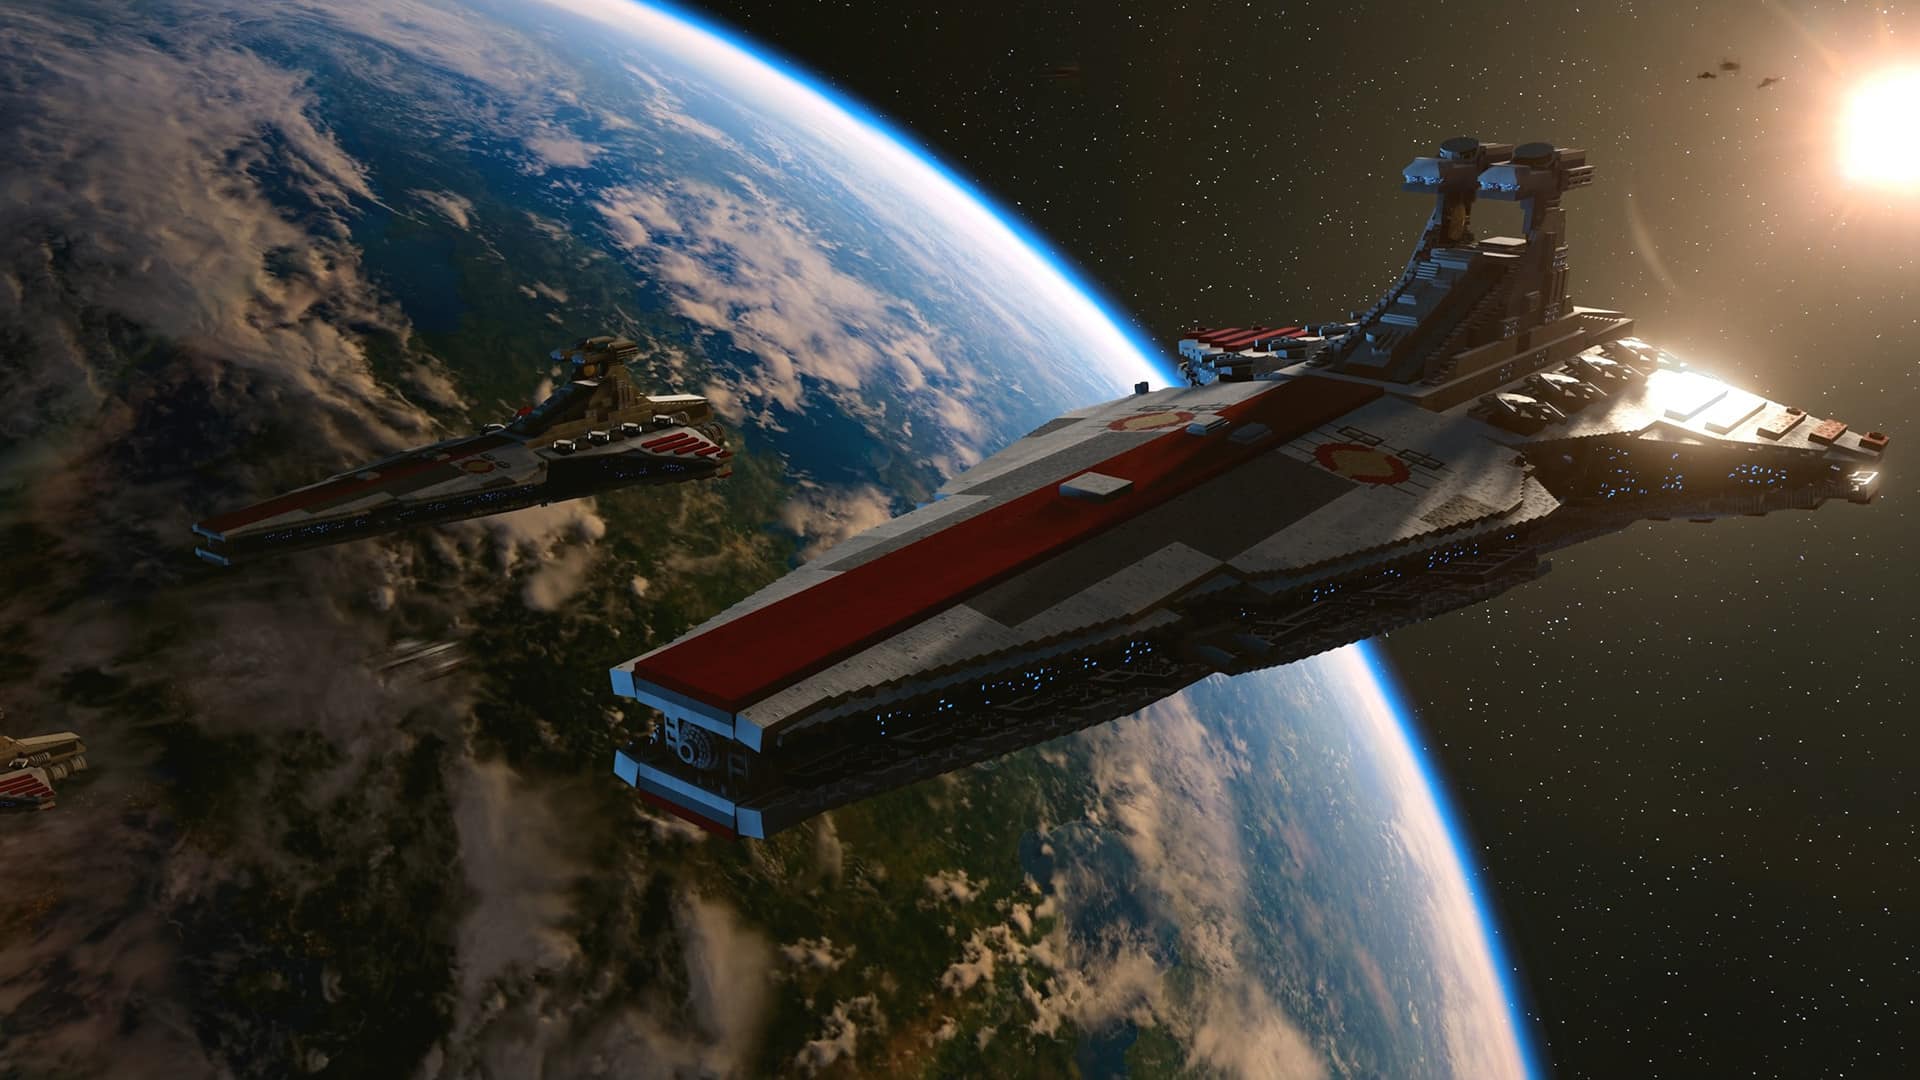 Lego Star Wars The Skywalker Saga space ship flies over Earth like planet